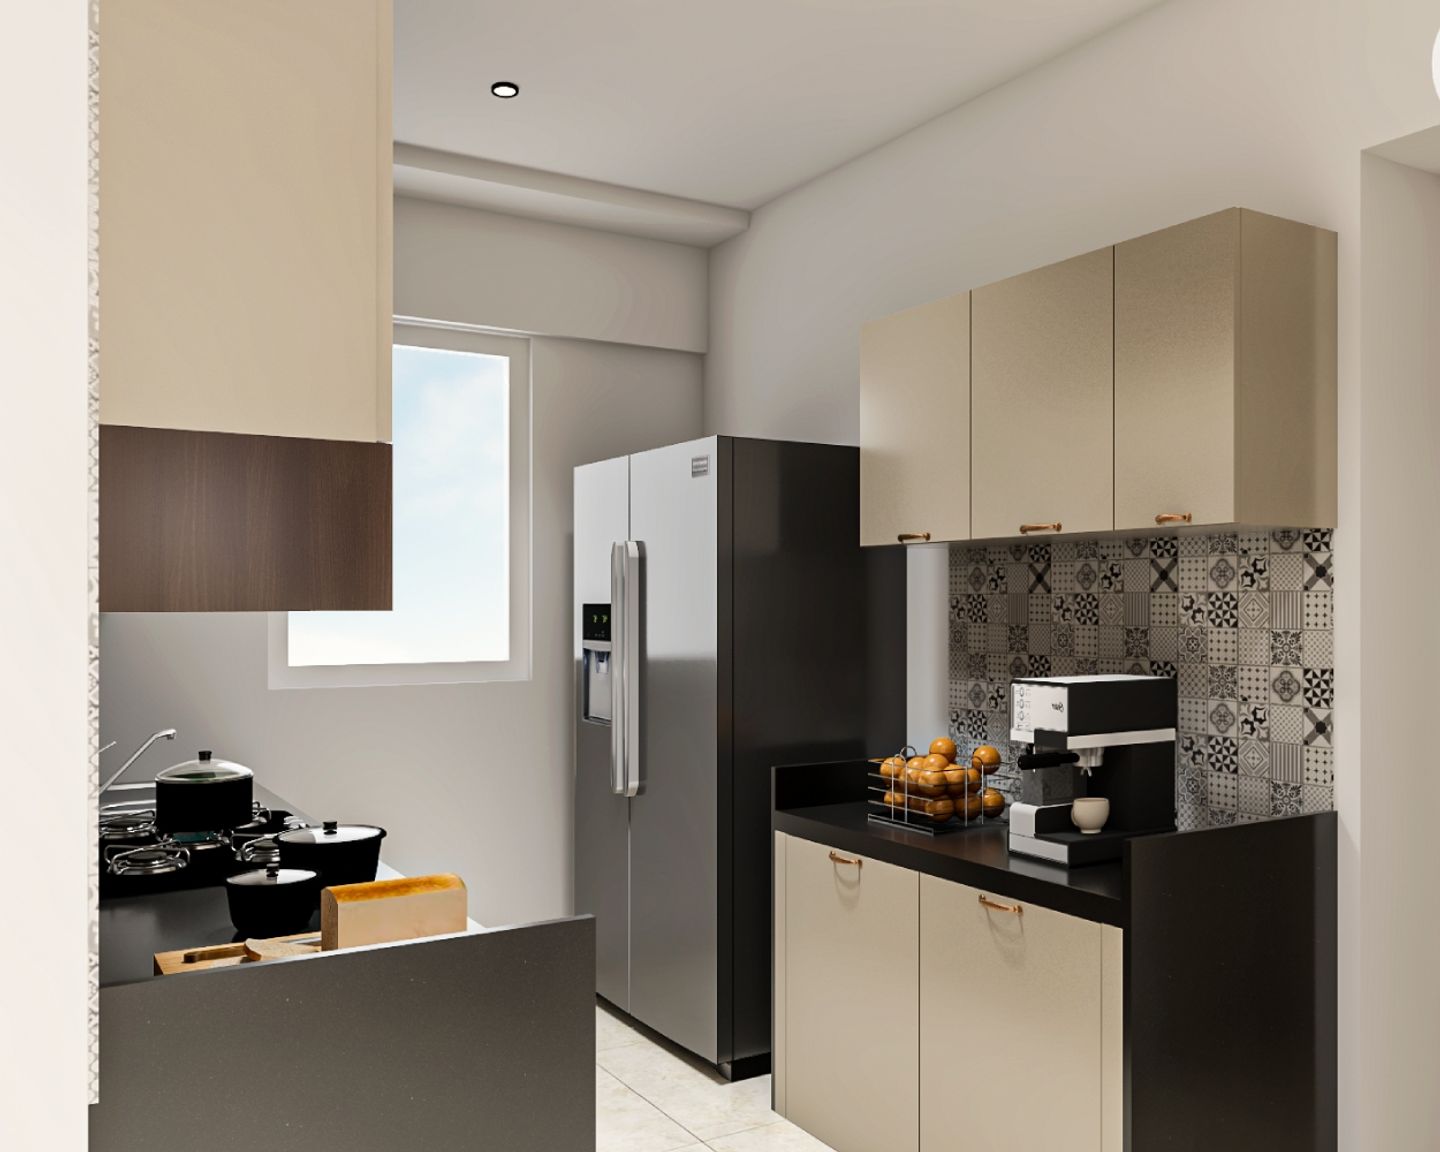 Modern Modular Parallel Kitchen Design With Black And White Dado Tiles